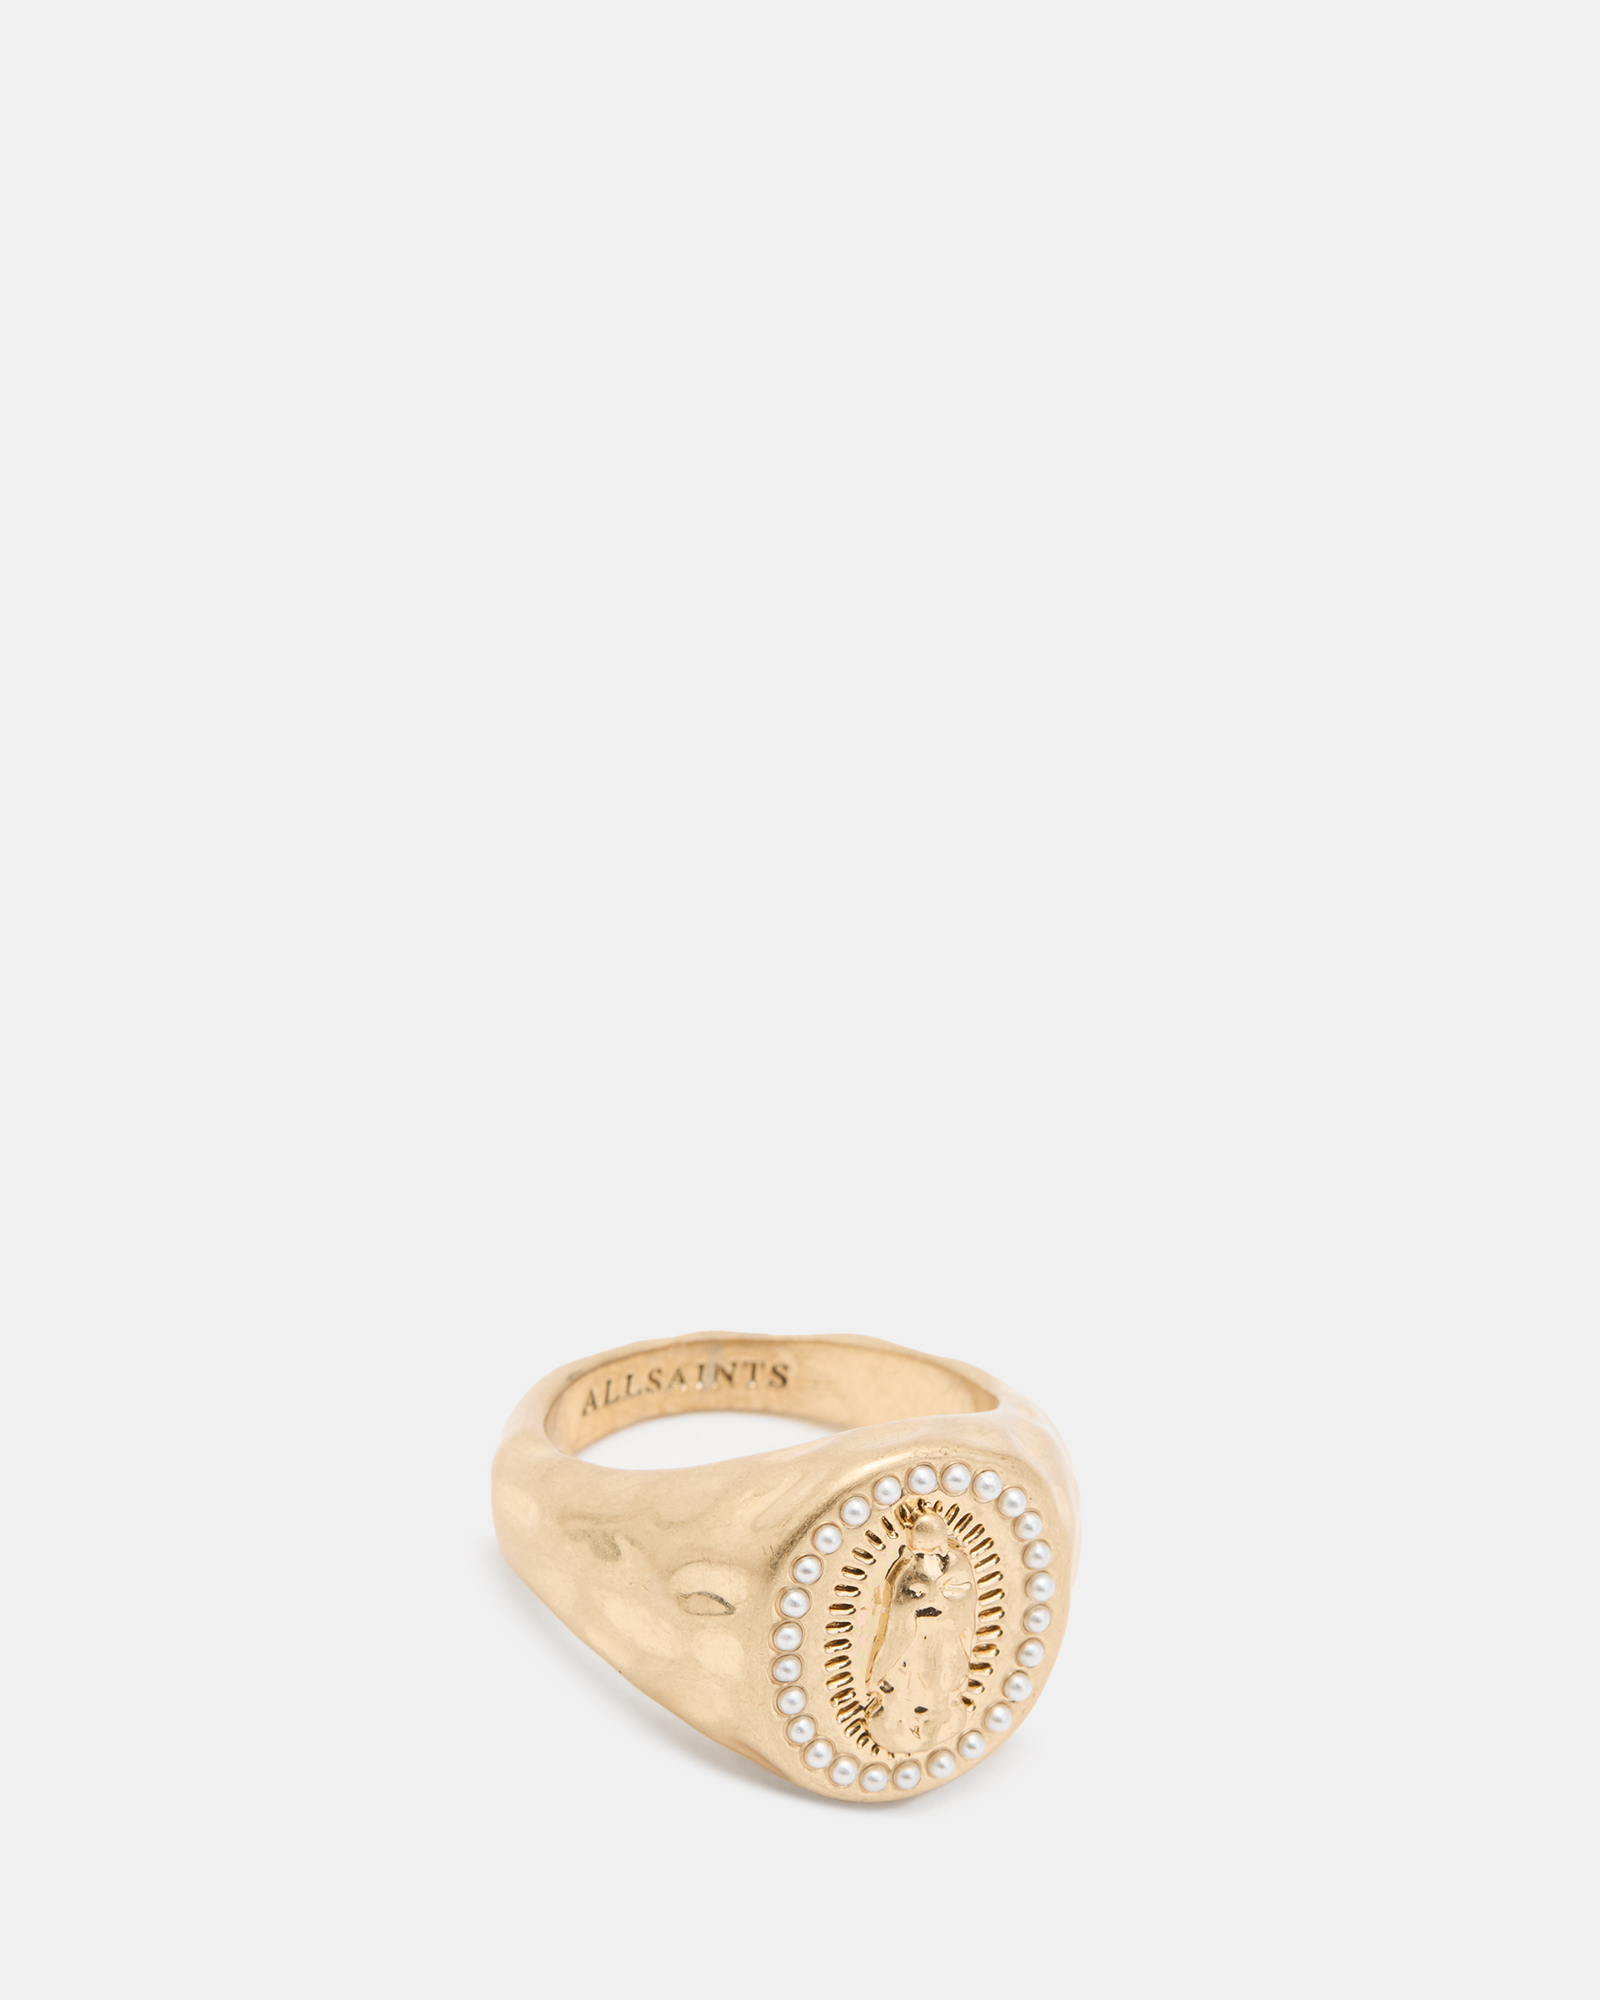 AllSaints Saint Pearl Beaded Ring,, Warm Brass/white, Size: L